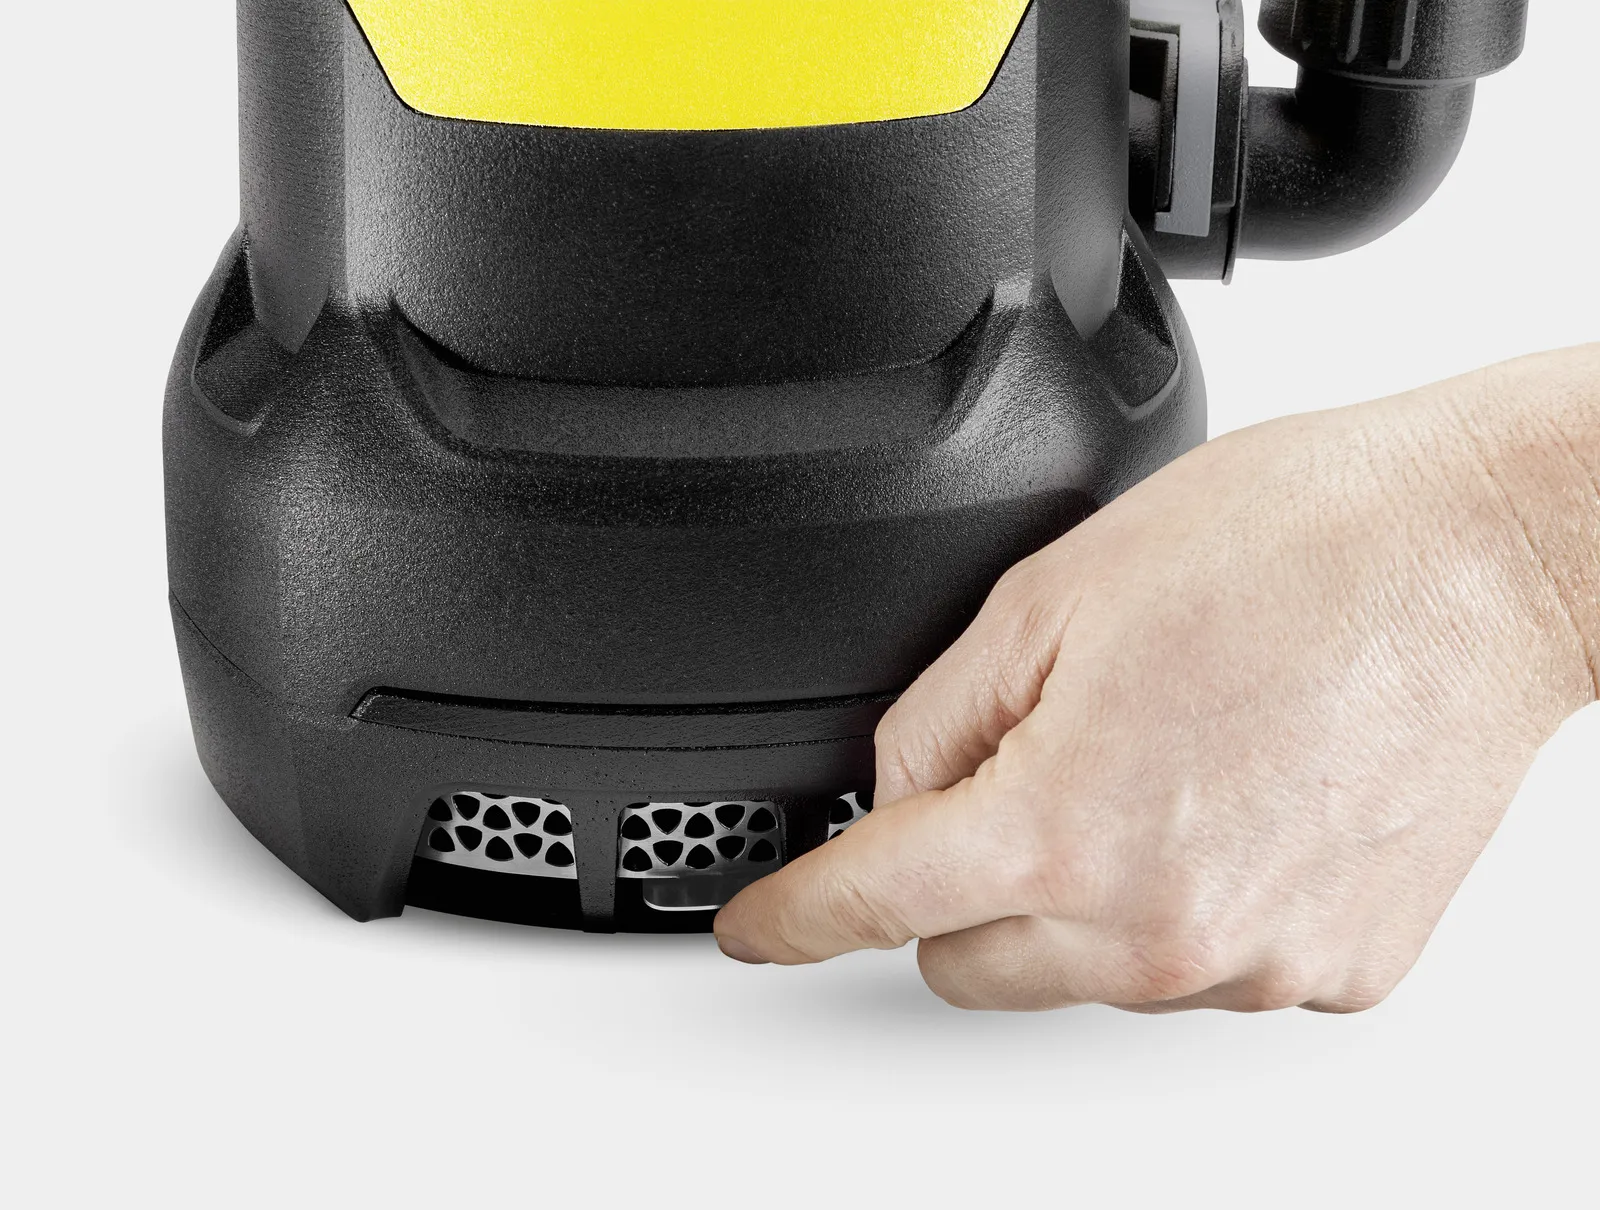 Karcher K5 Premium Smart Control Plus Home Pressure Washer